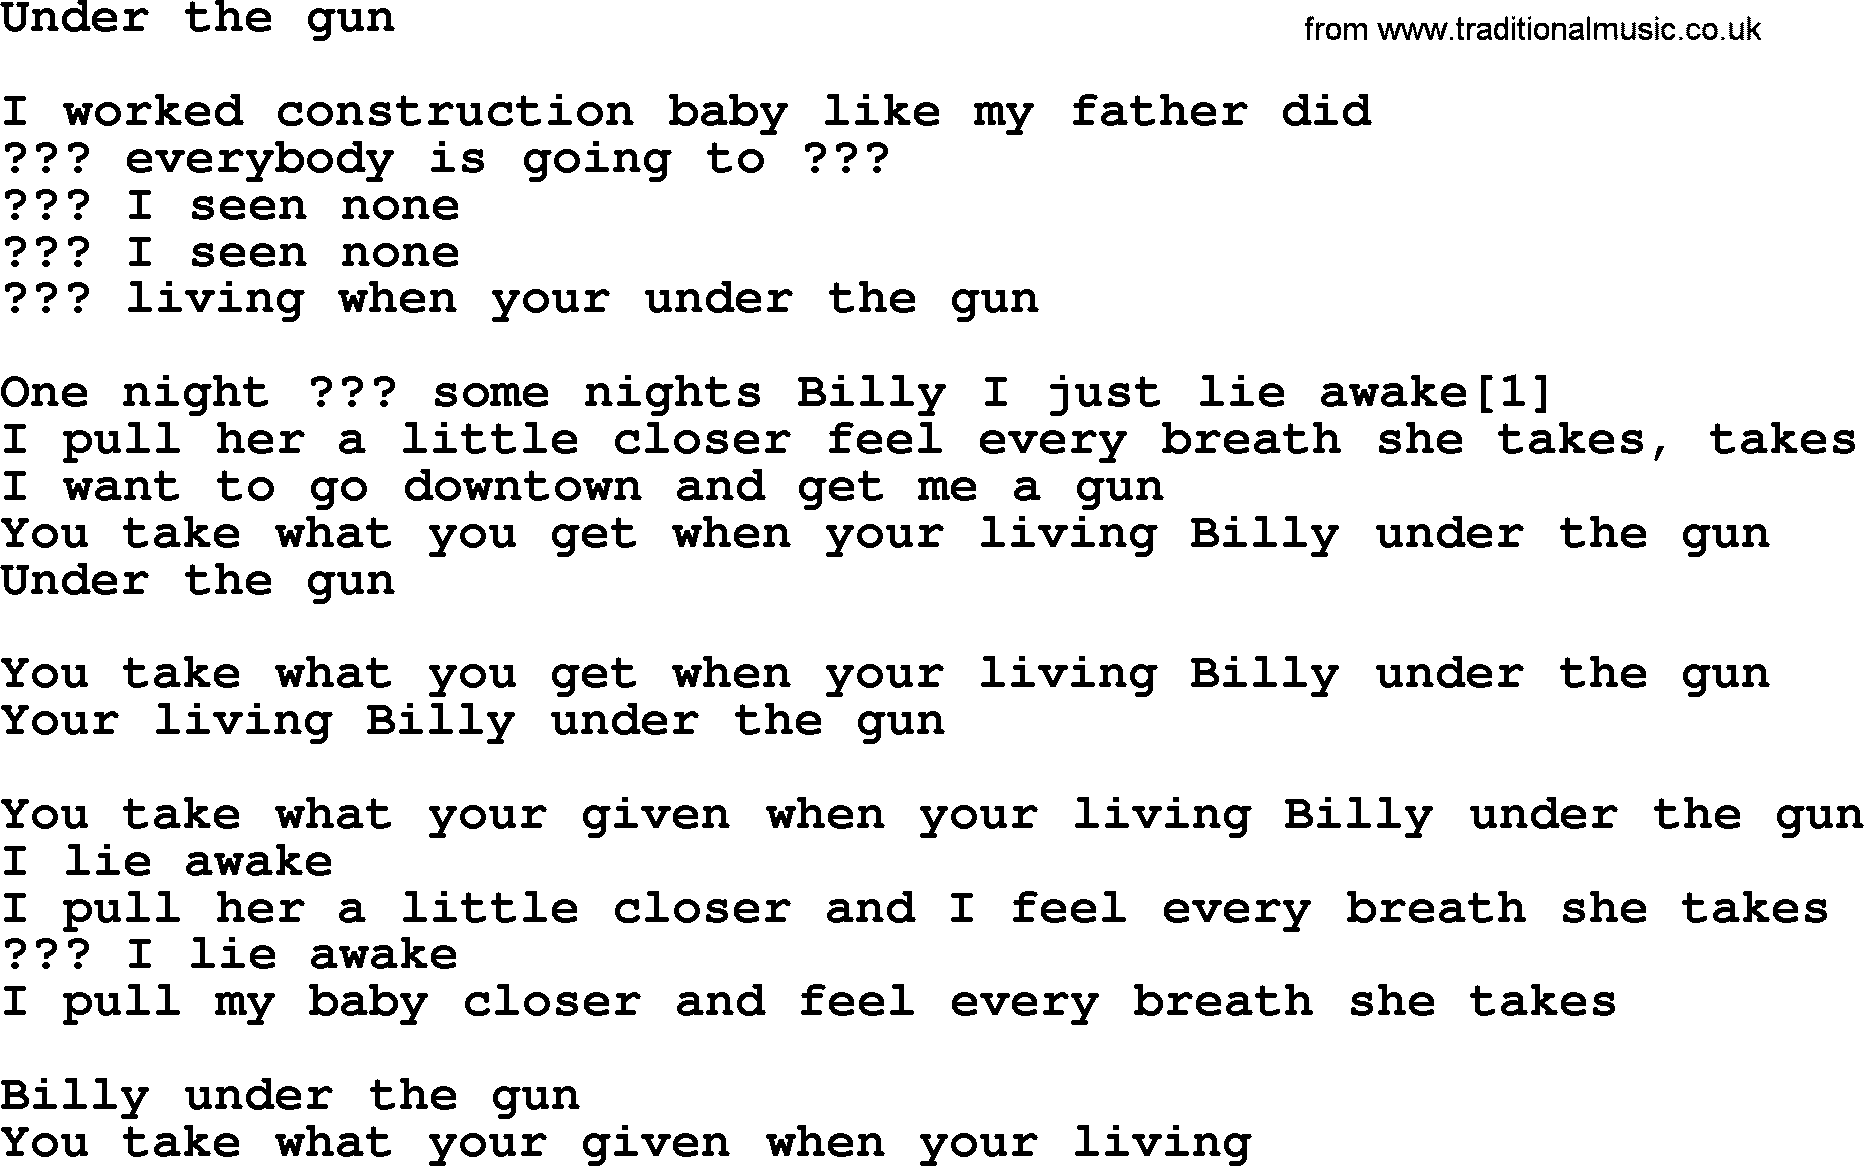 Bruce Springsteen song: Under The Gun lyrics